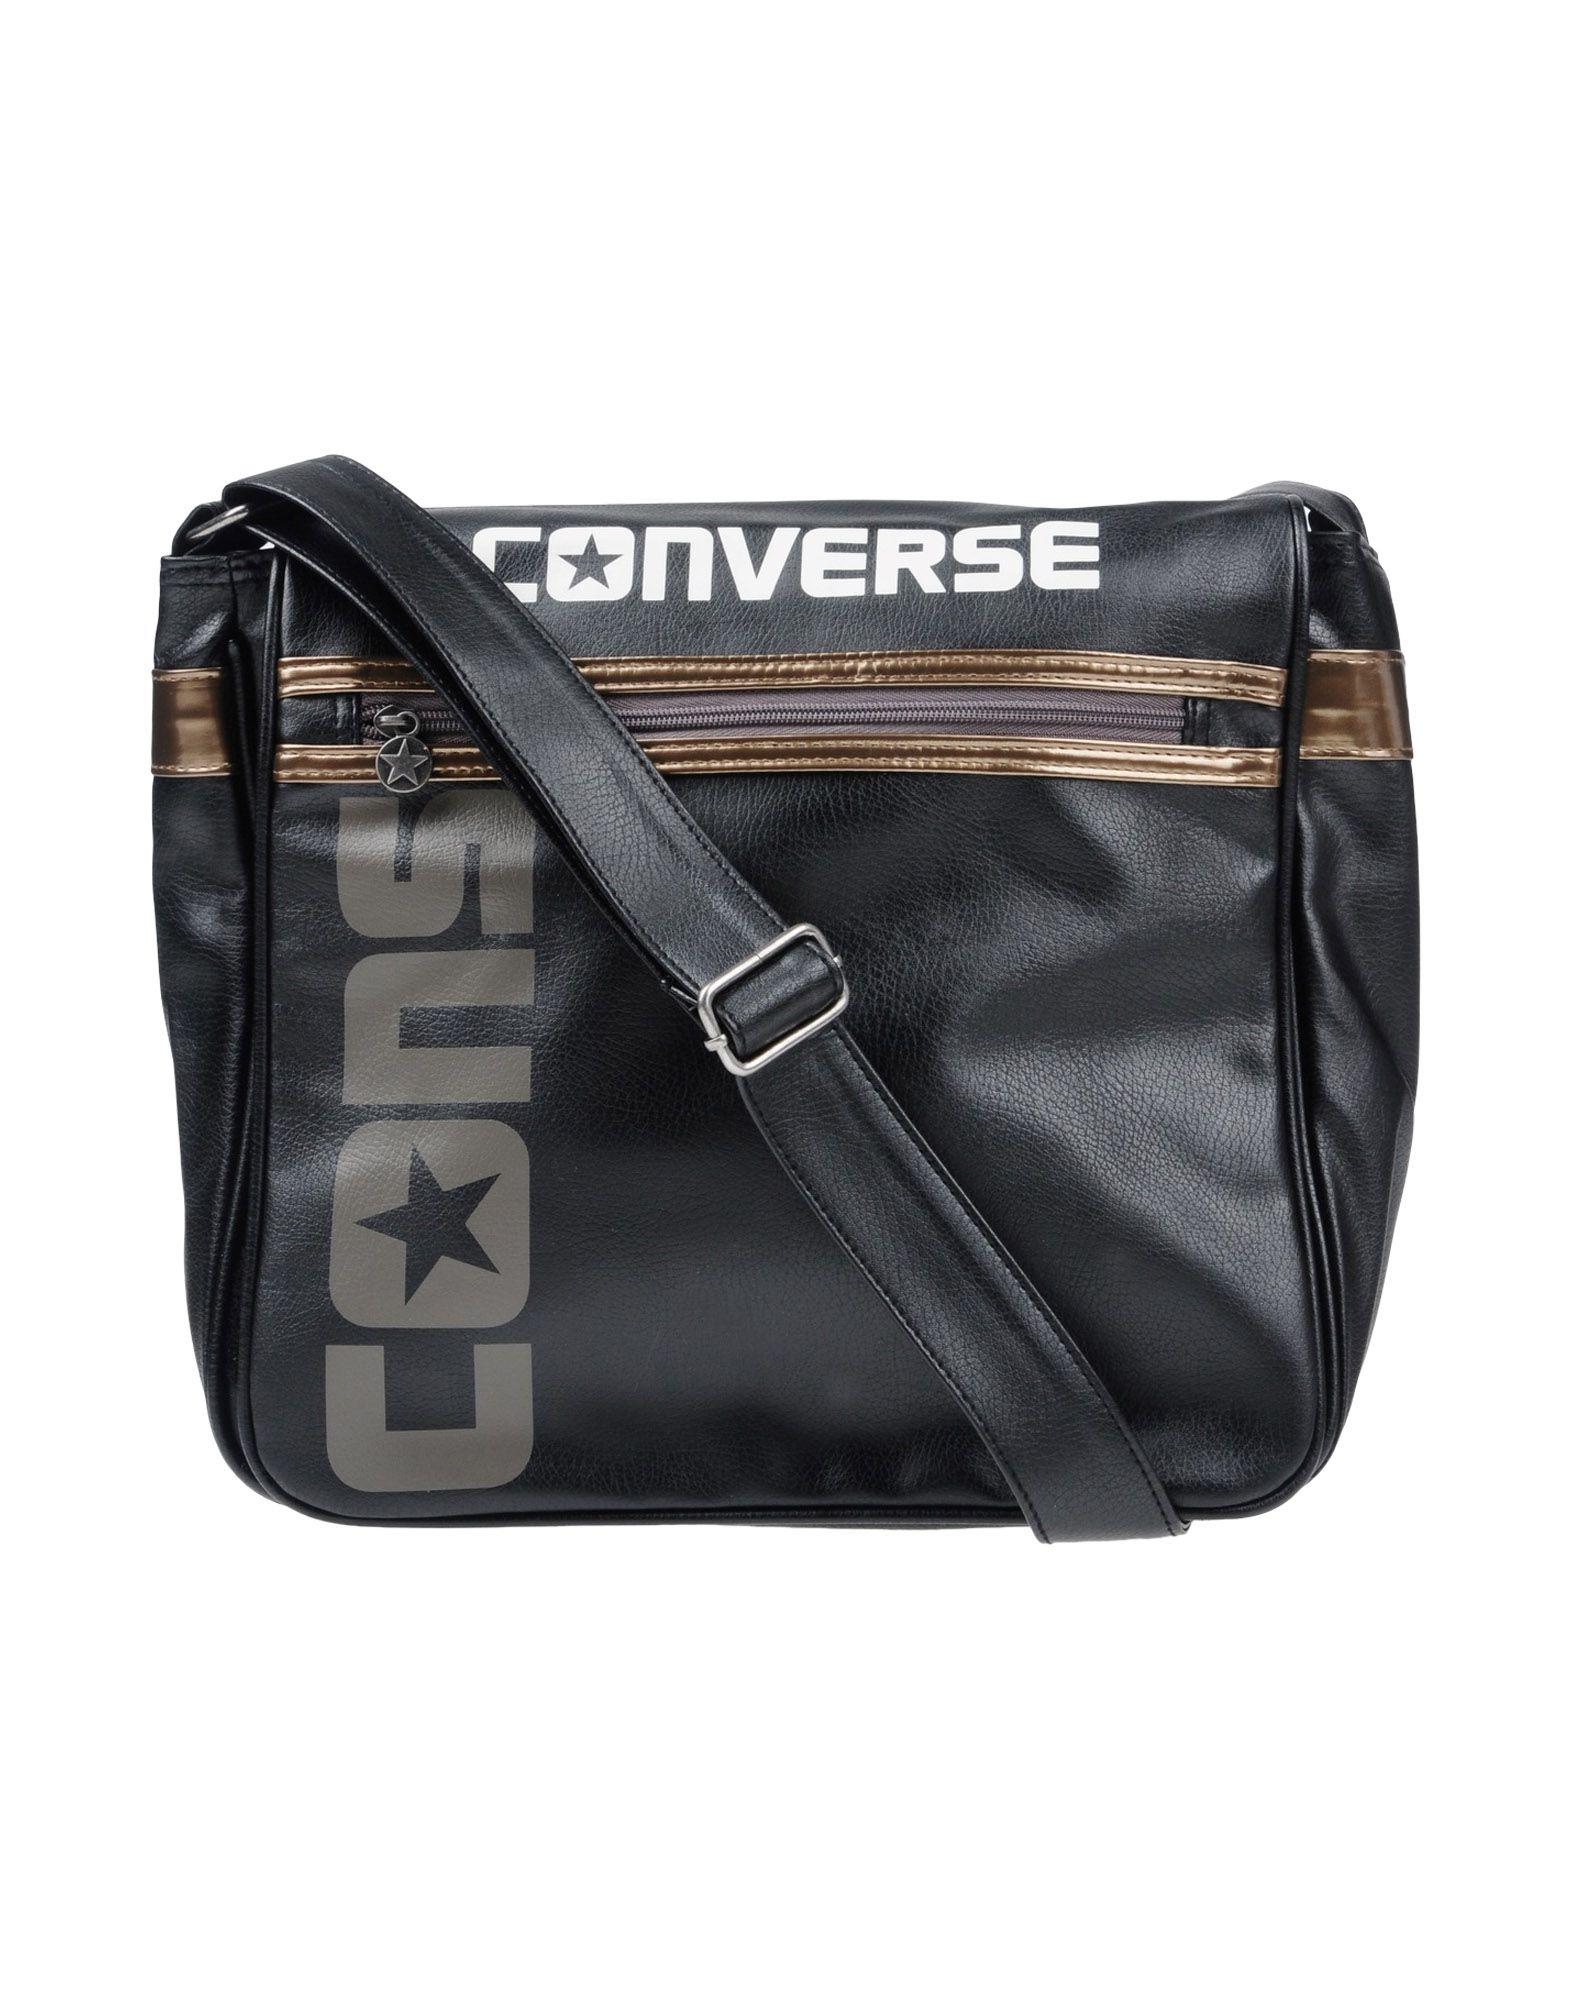 Converse Cross-body Bag in Black for Men - Lyst